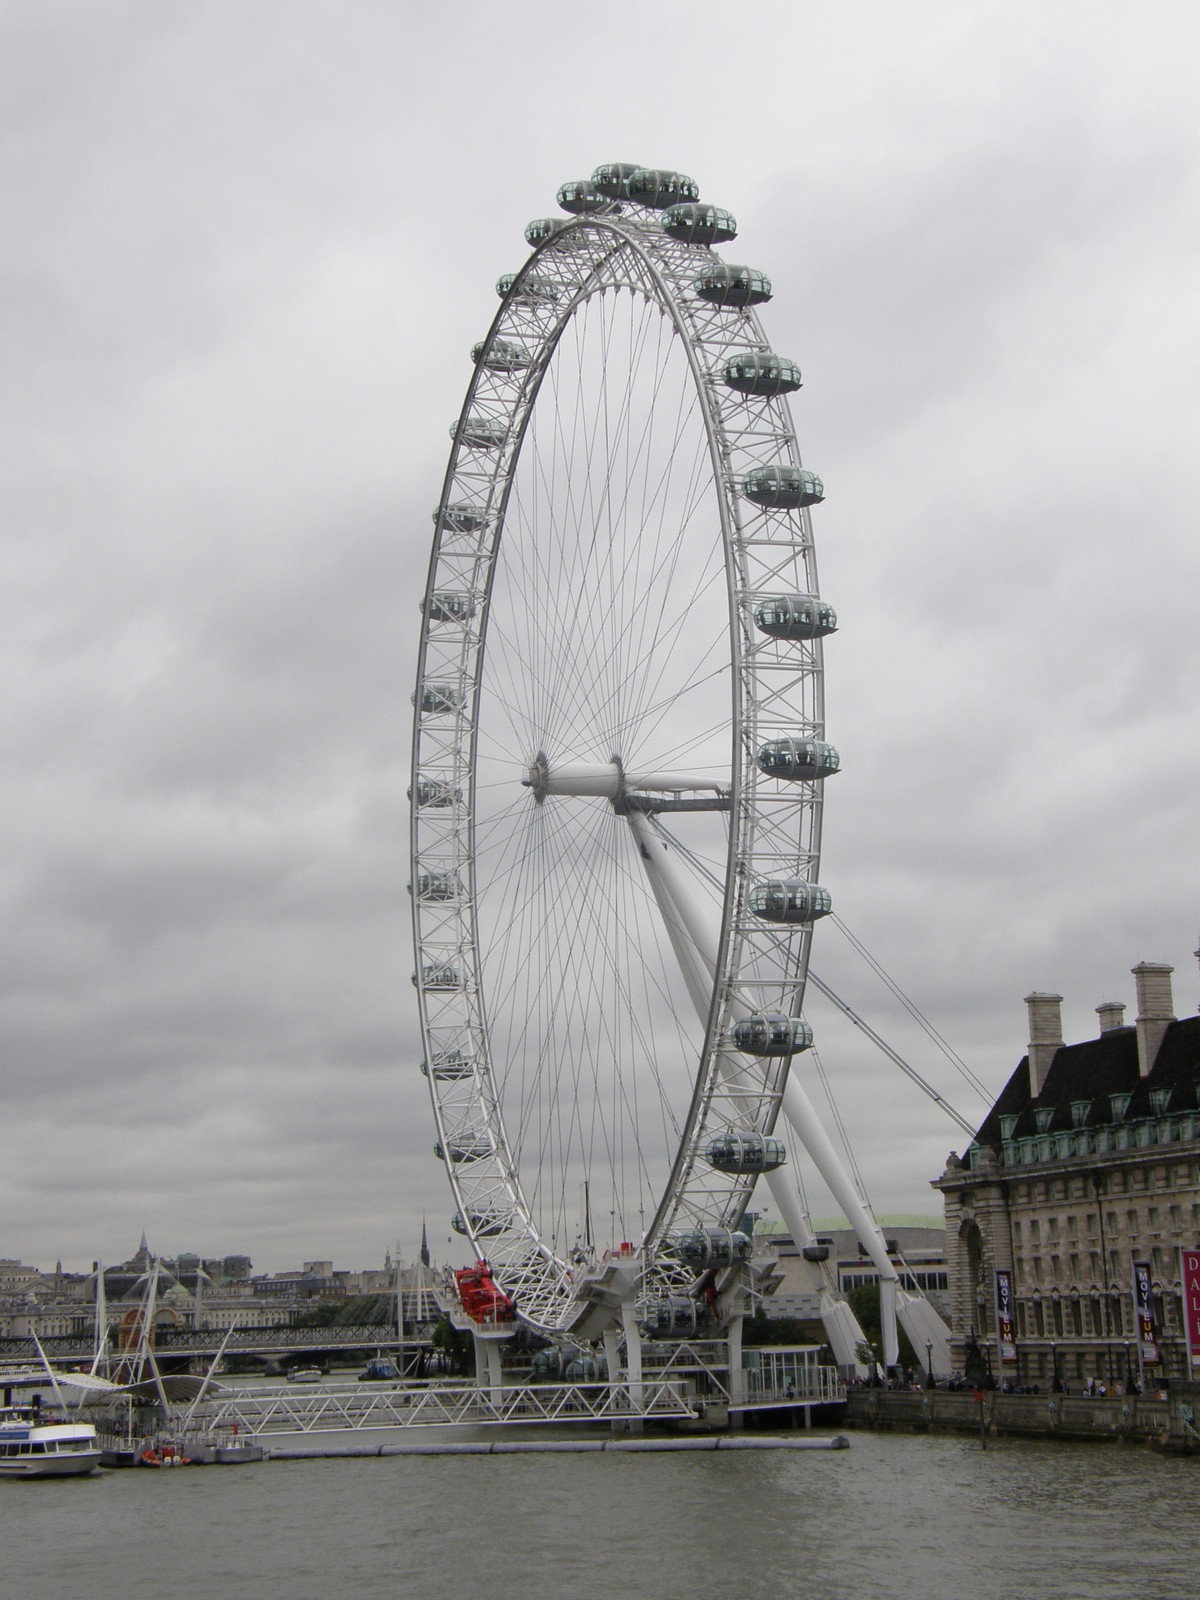 The London Eye, as seen from Westminster Bridge